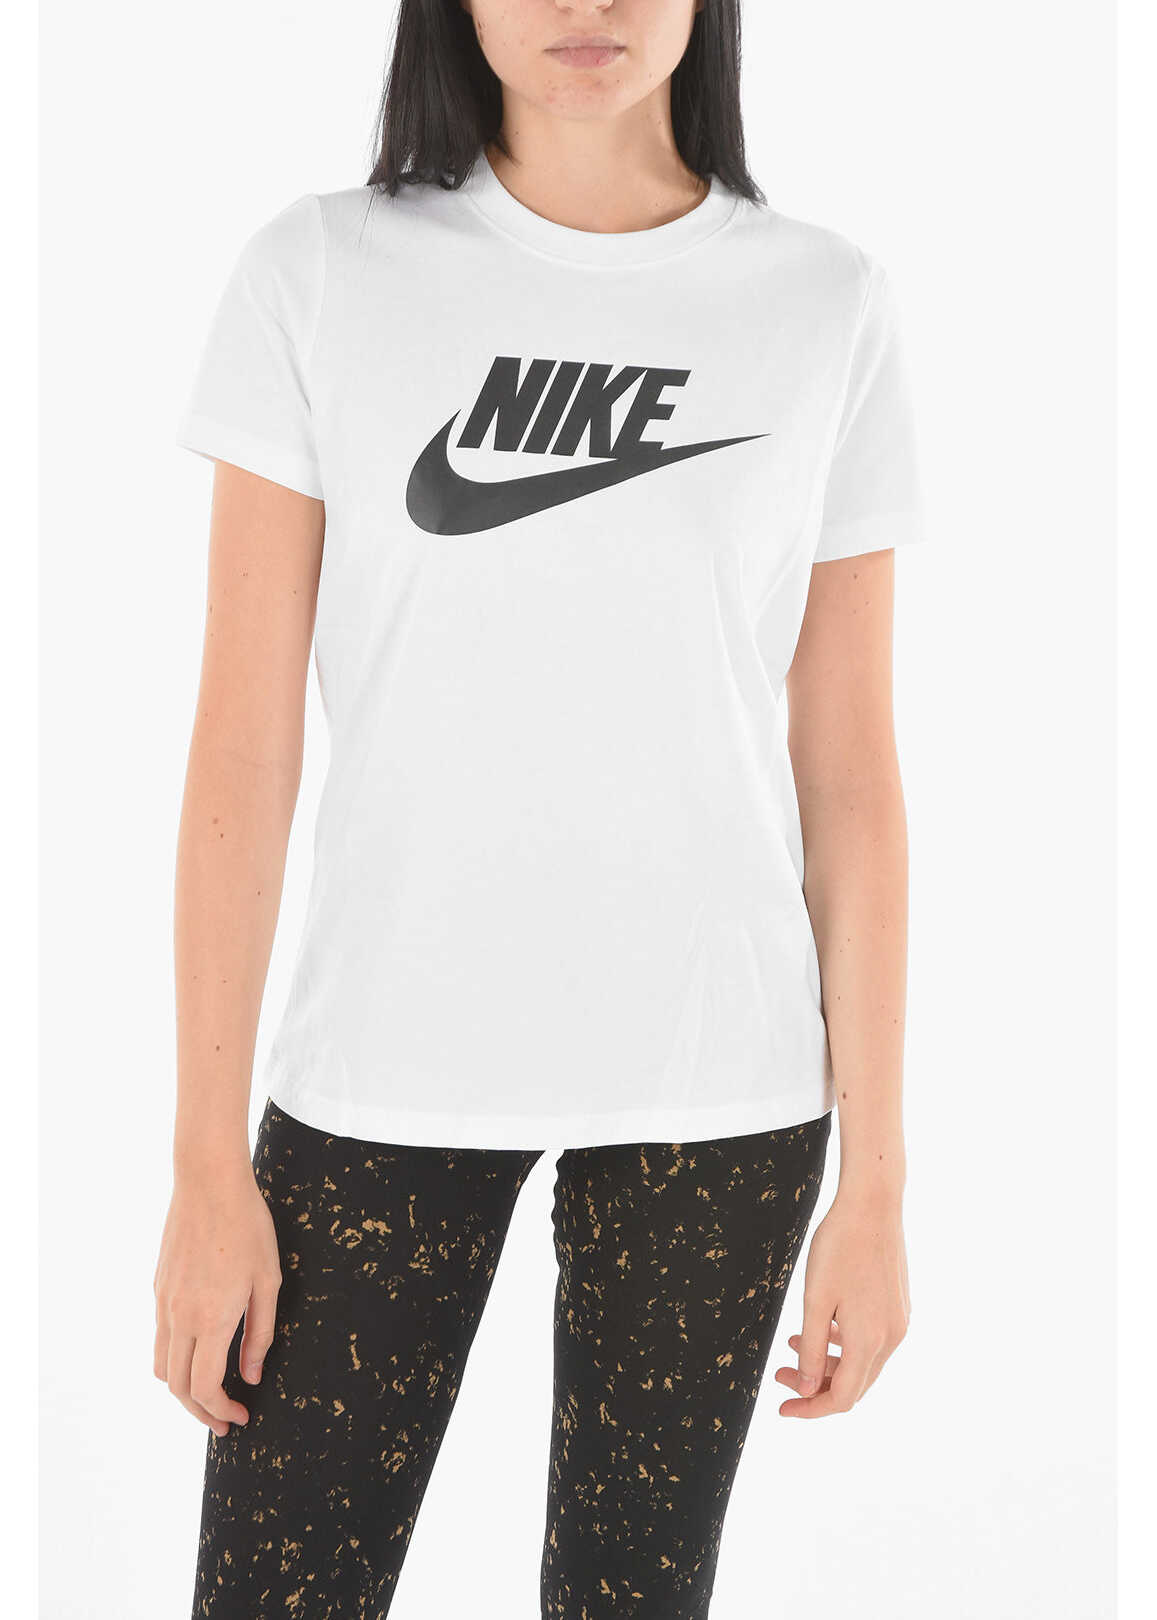 Nike Logo Printed Crew-Neck T-Shirt White image